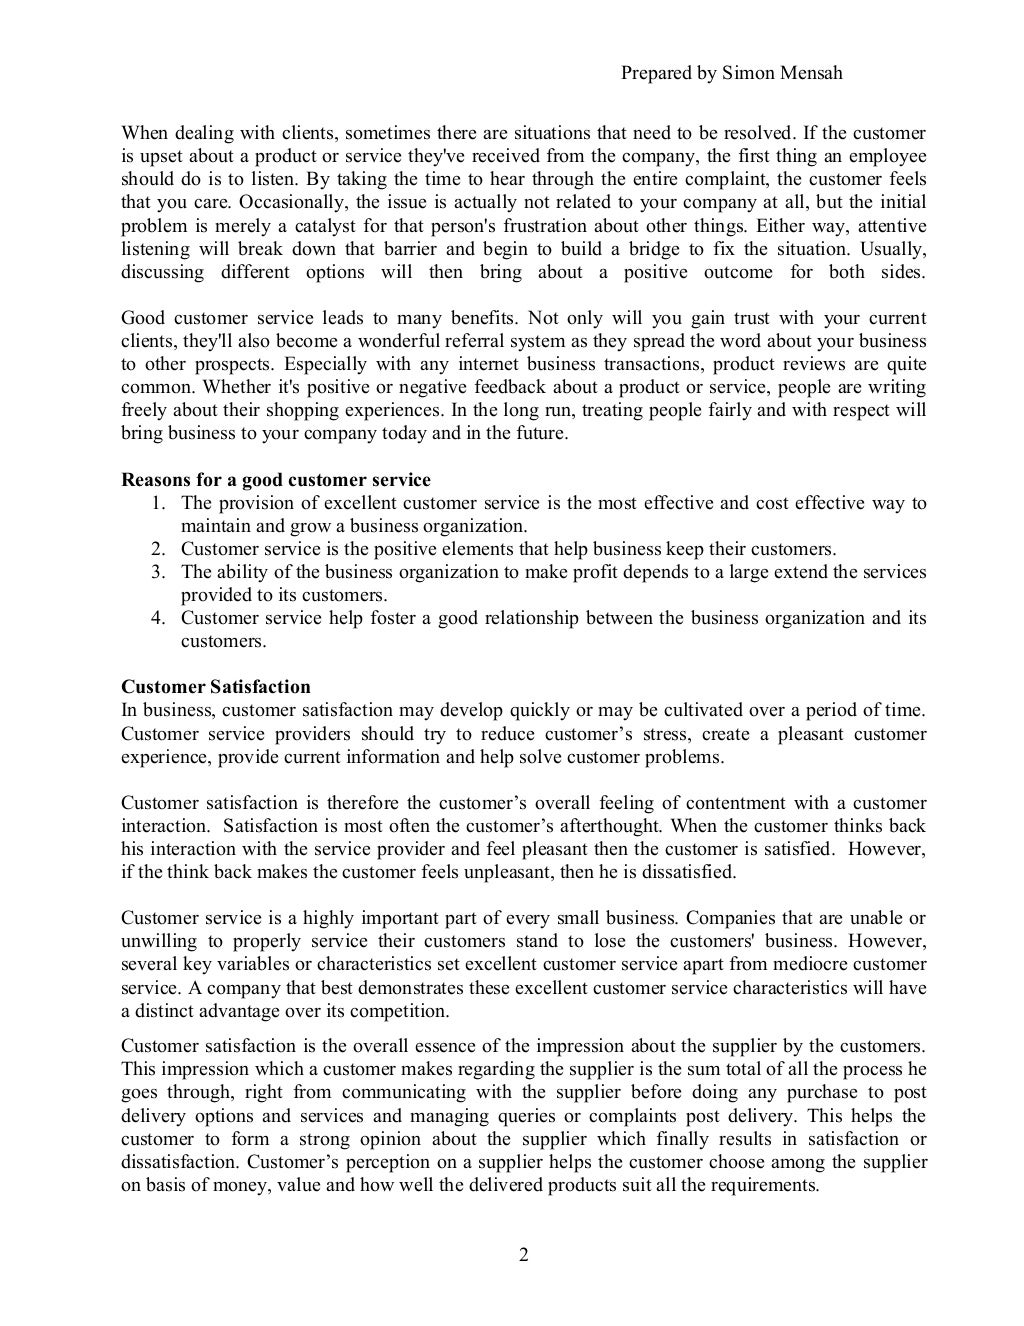 customer service dissertation pdf